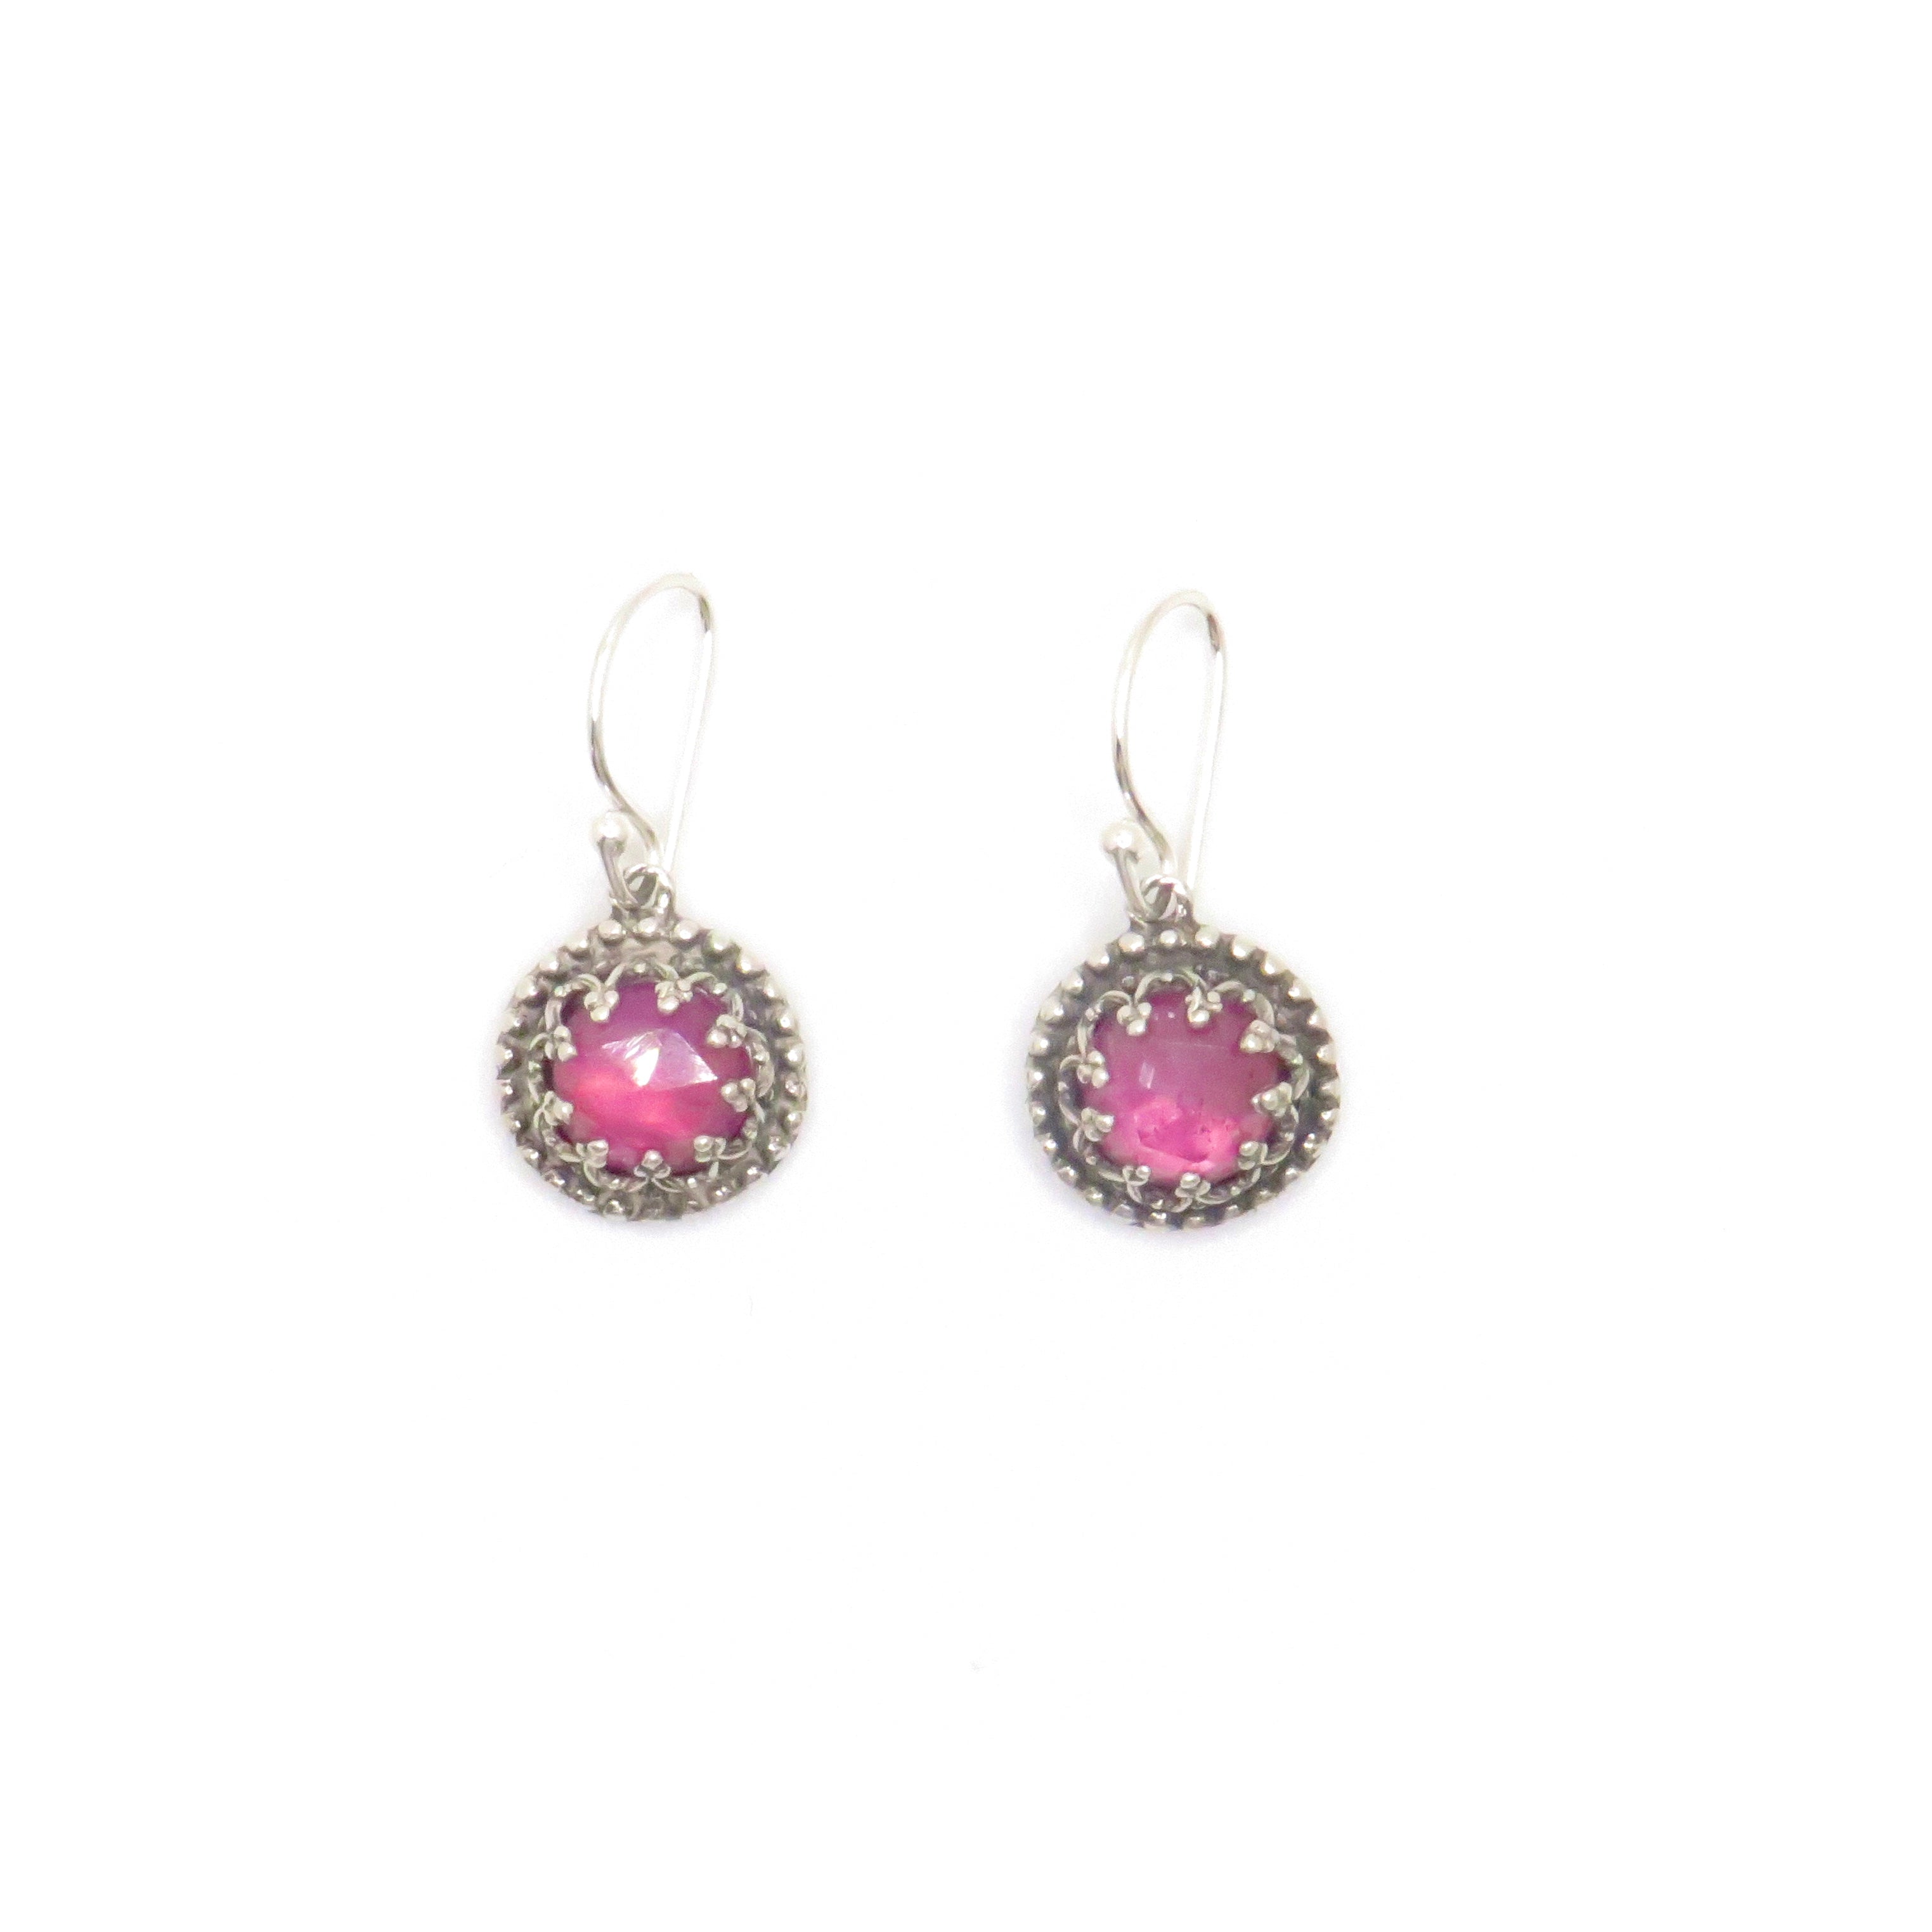 silver drop earrings with pink gemstone